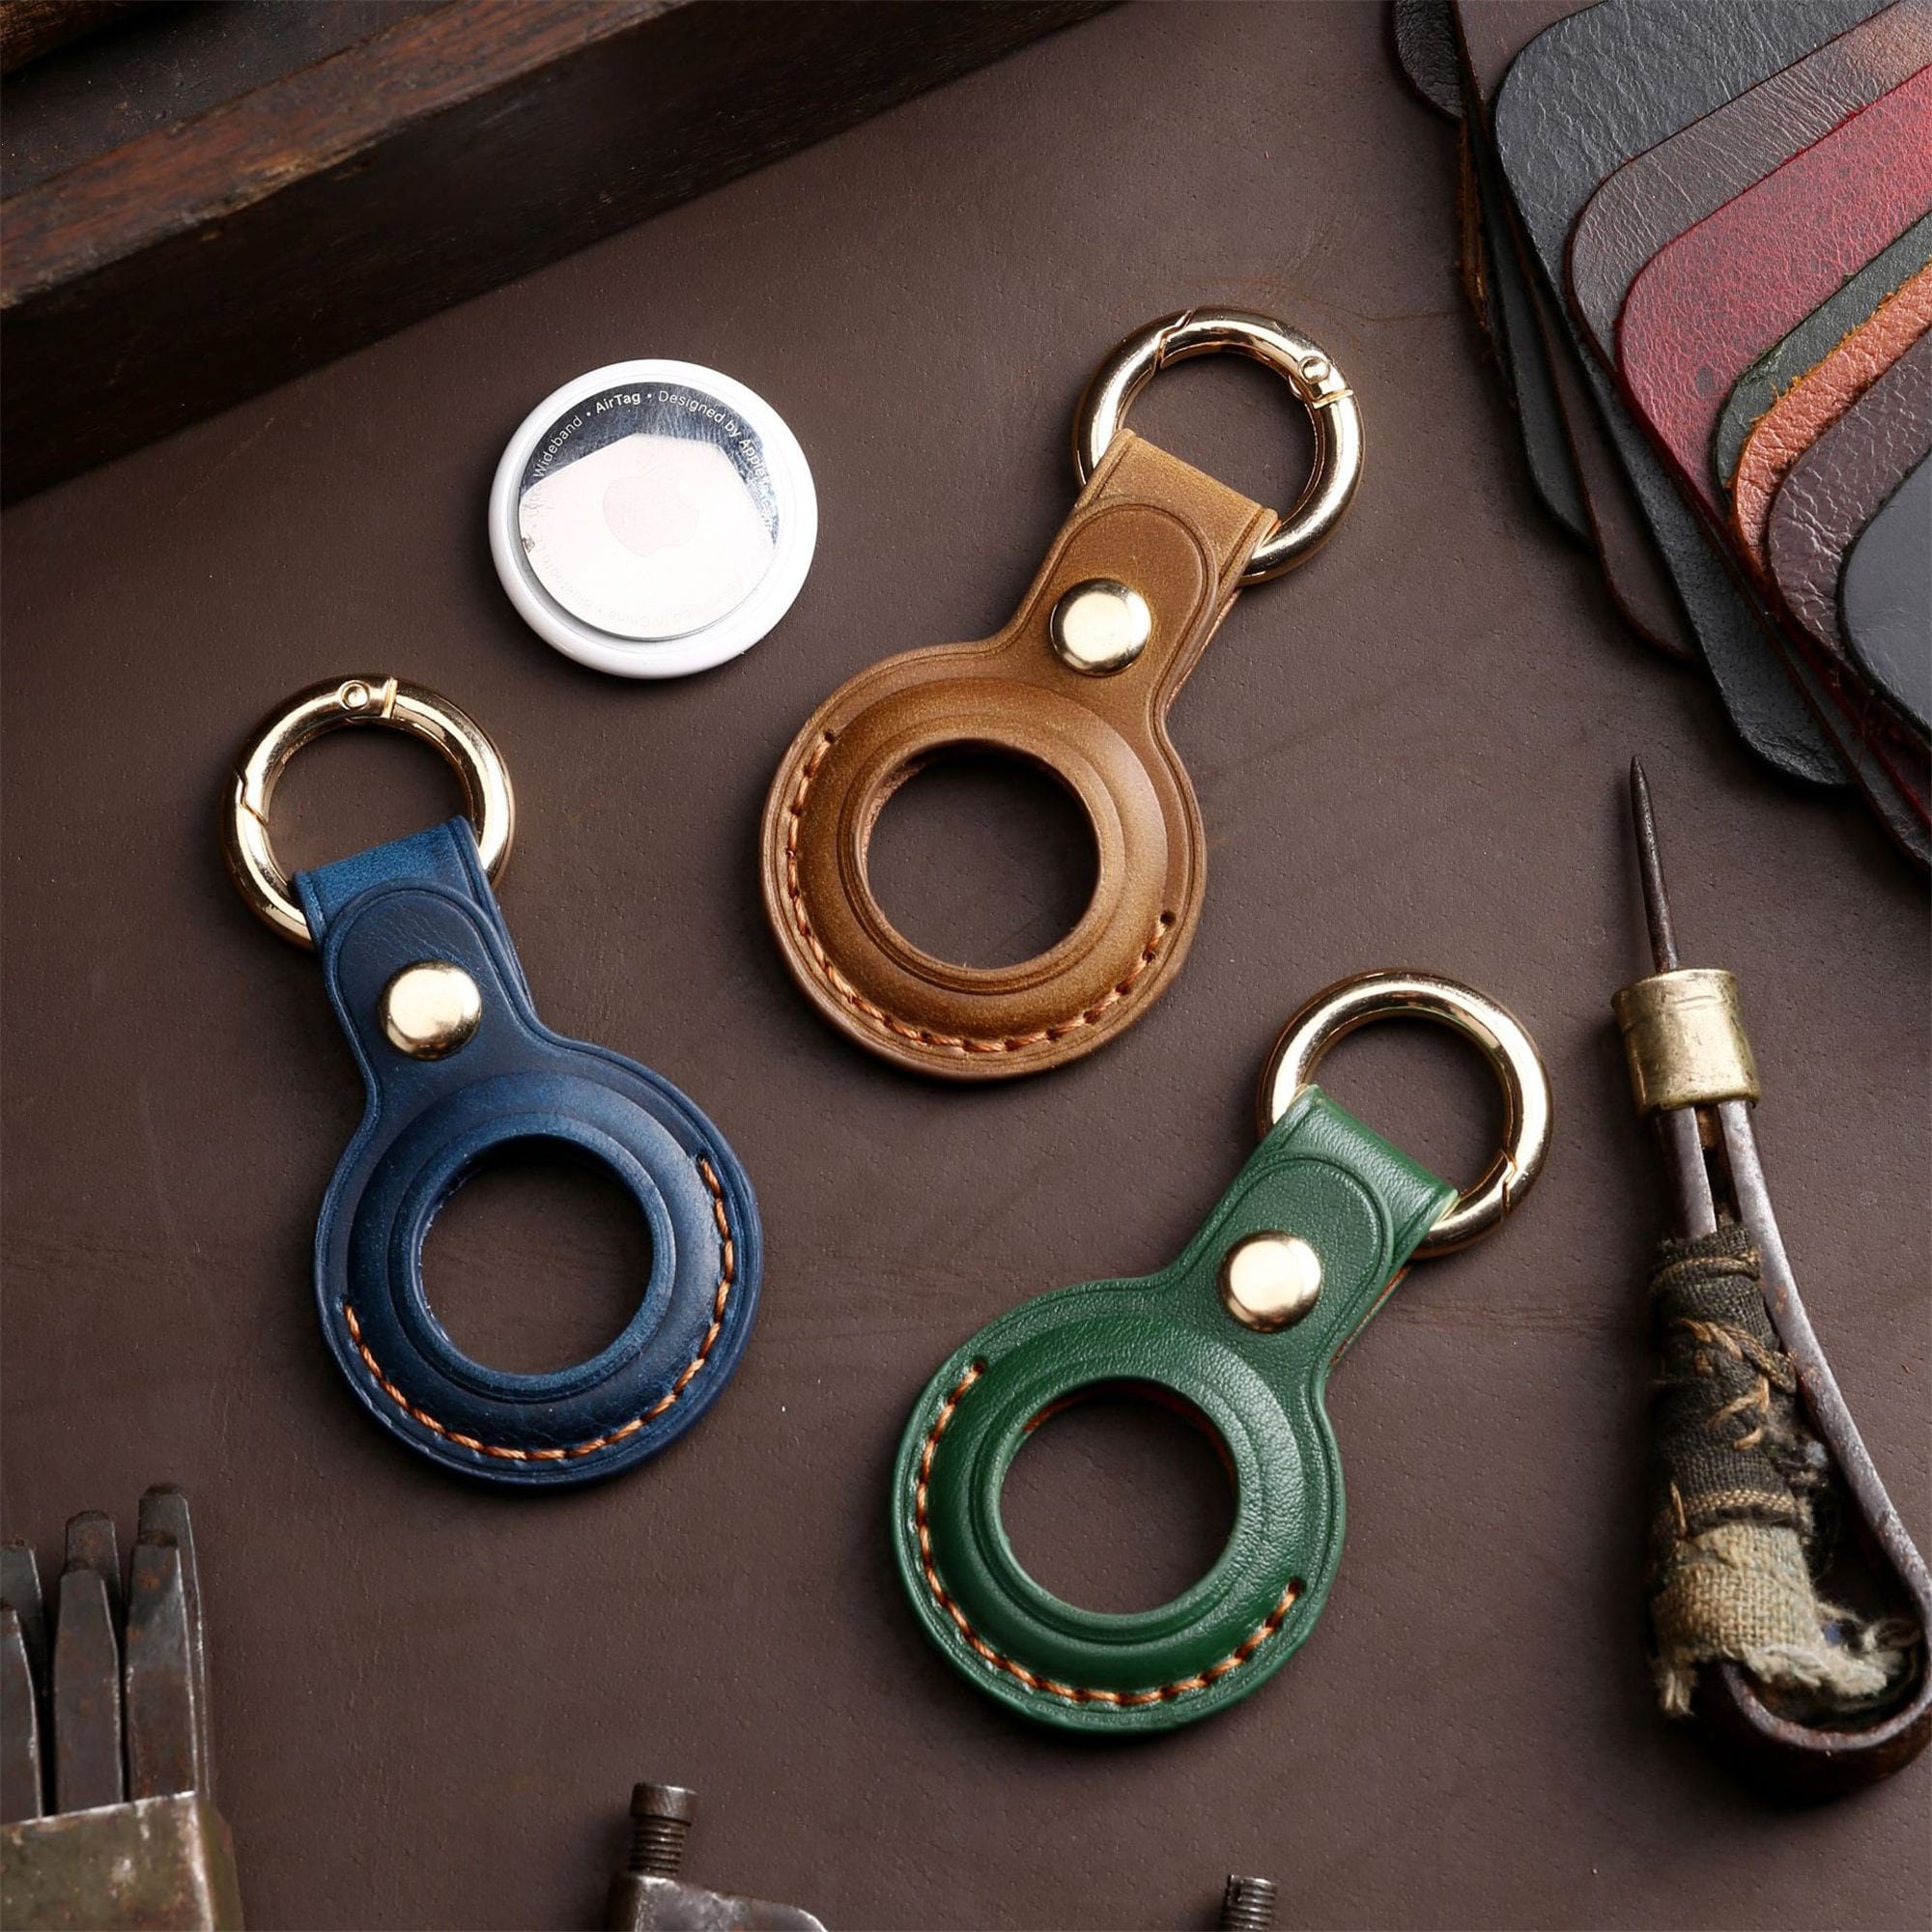  KUYWLMKMZZ Keychain Leather Dog Animal Keychain Ladies Bag  Pendant Jewelry Car Keyring Keychain Keychain (Color : F, Size : Small) :  Clothing, Shoes & Jewelry